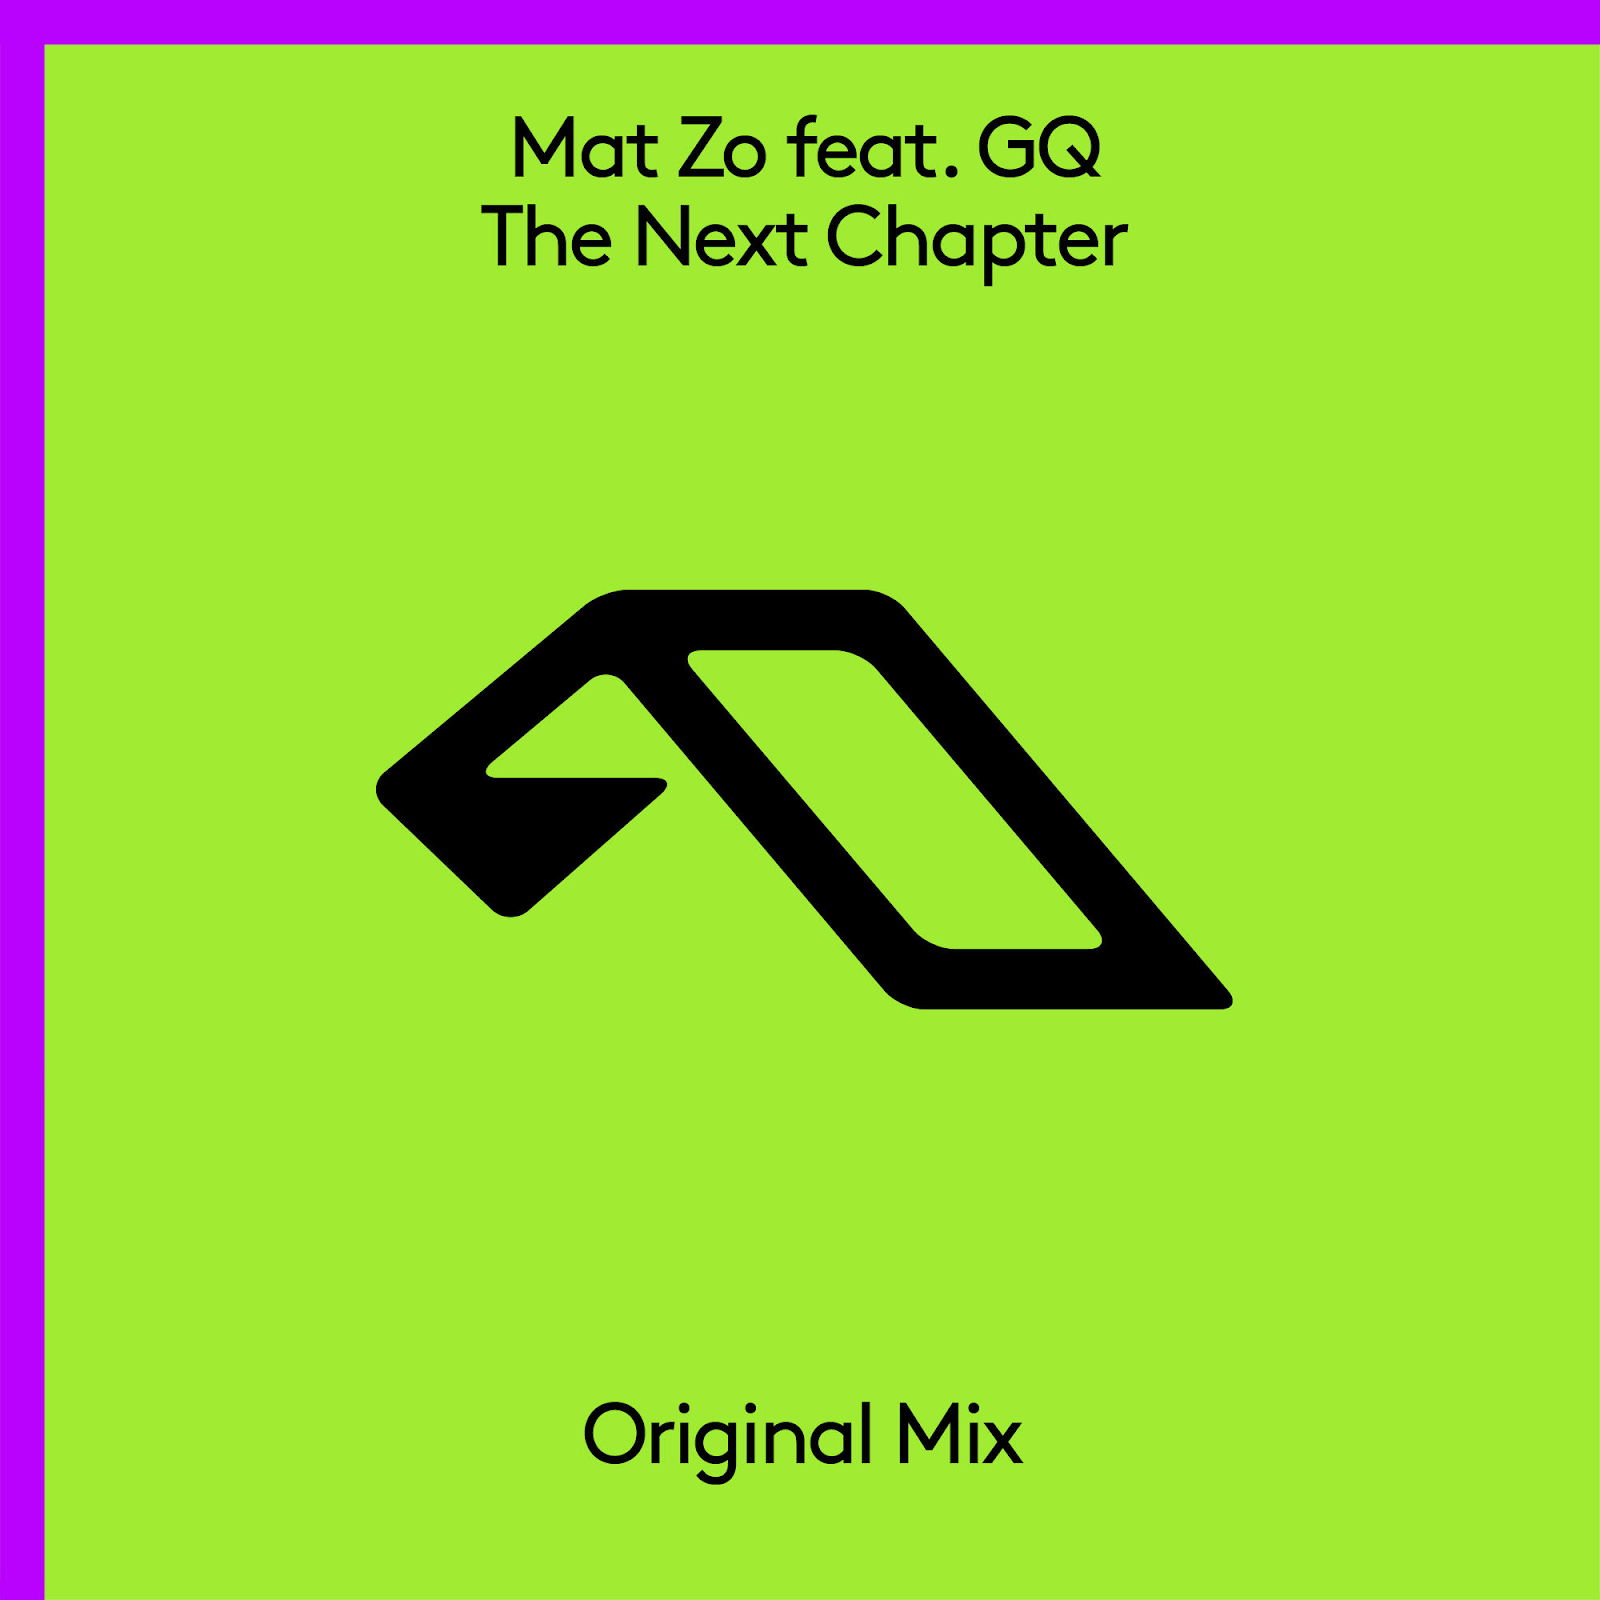 Mat Zo feat. GQ presents The Next Chapter on Anjunabeats